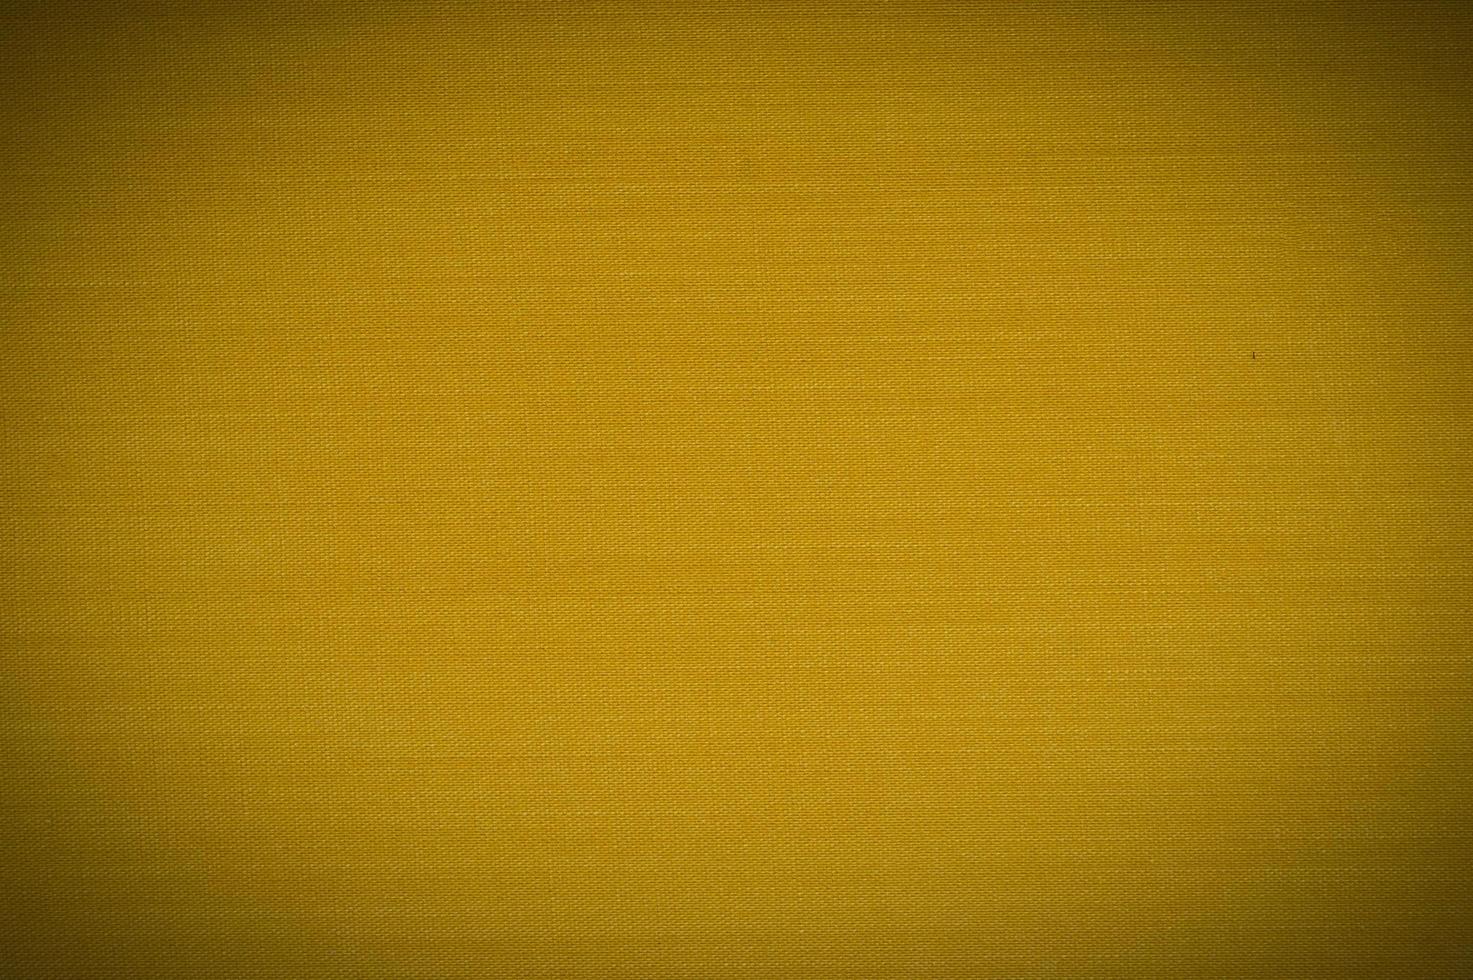 bokomslag canvas texturerad gul bakgrund foto